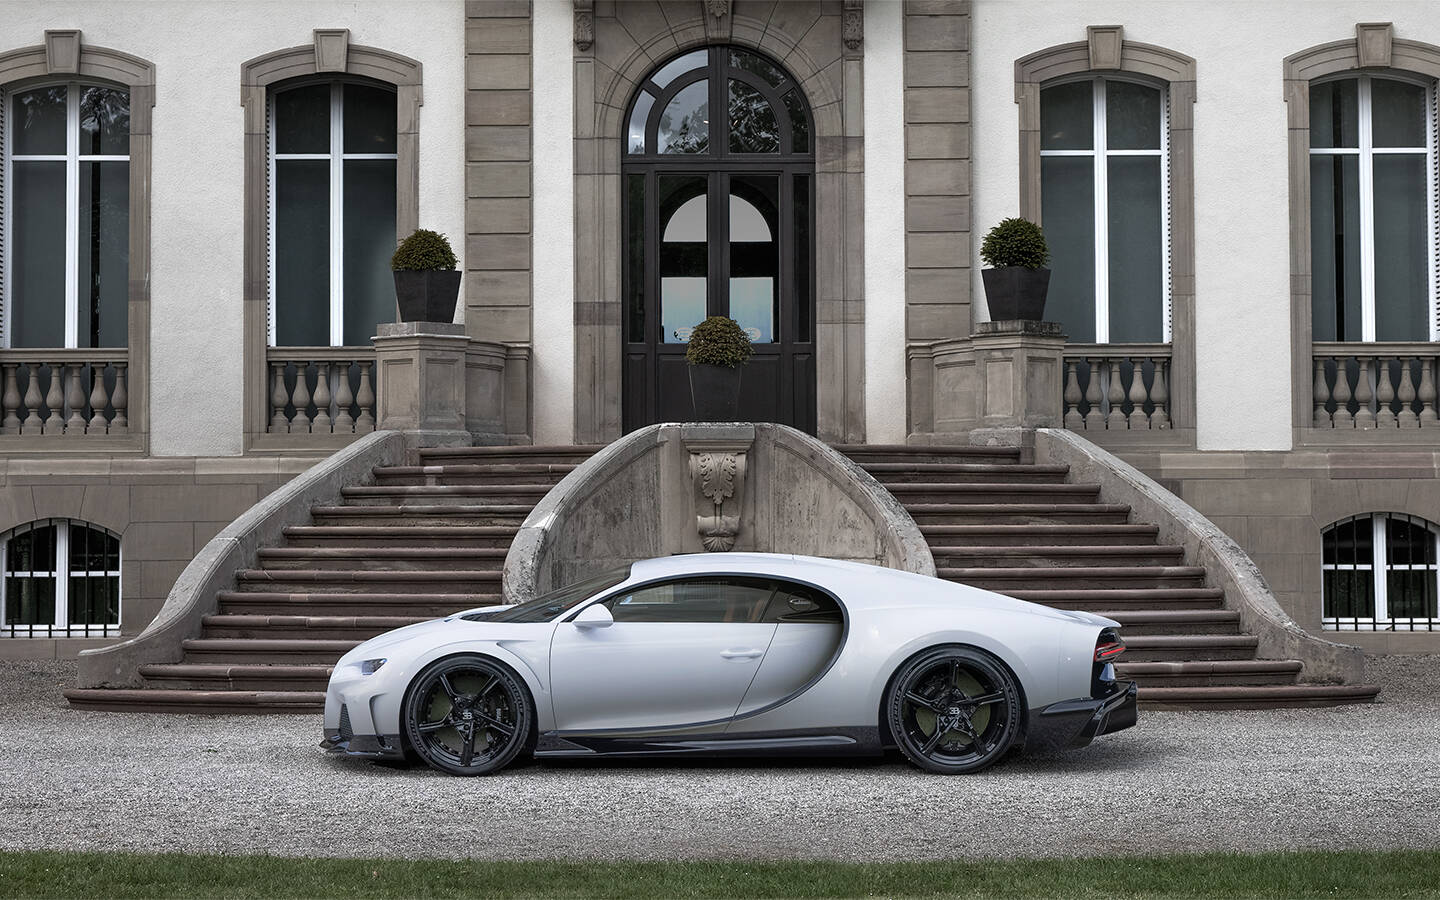 La Bugatti Bolide a l'air d'une Batmobile dans les rues de Milan